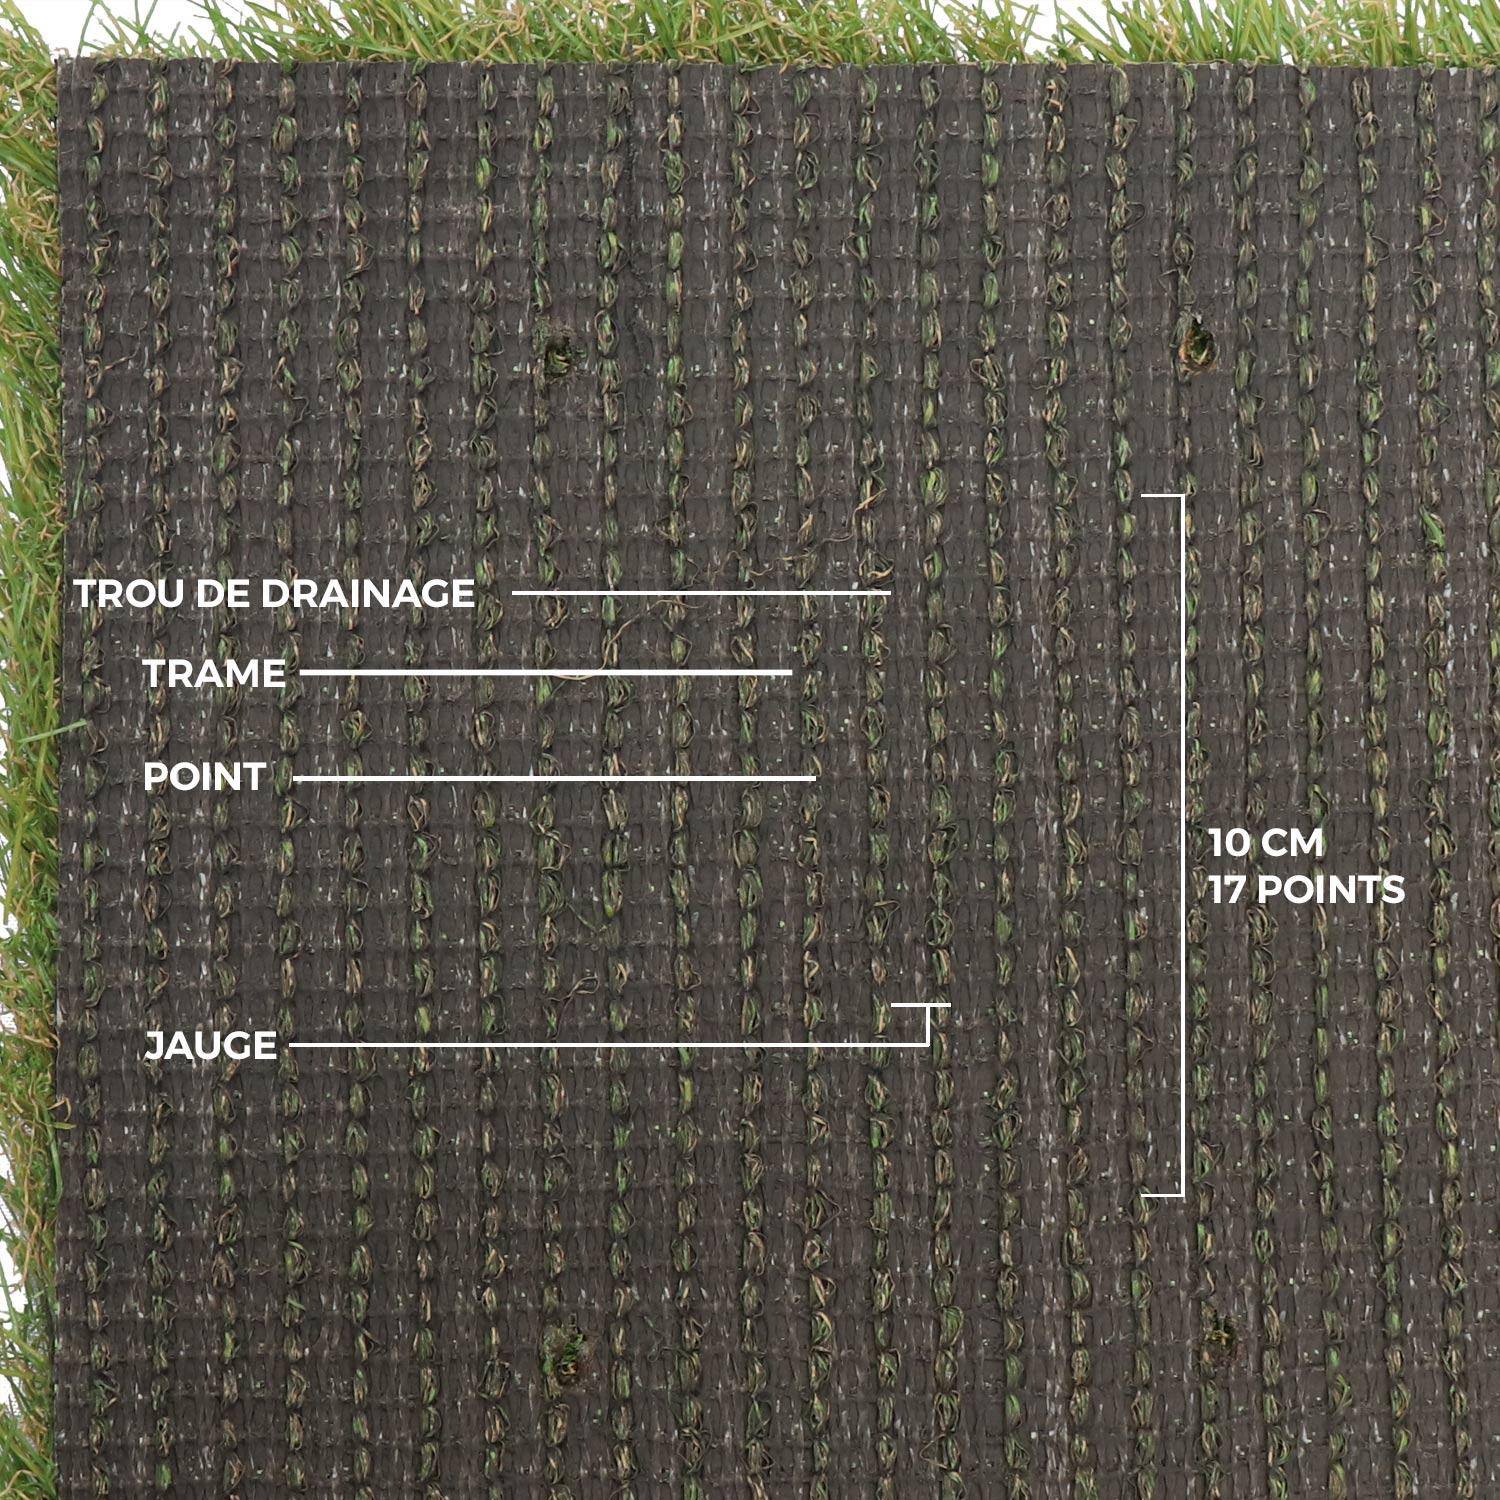 Relva sintética 1x5m, baloiço, verde esmeralda, verde caqui e bege, 35mm Photo5